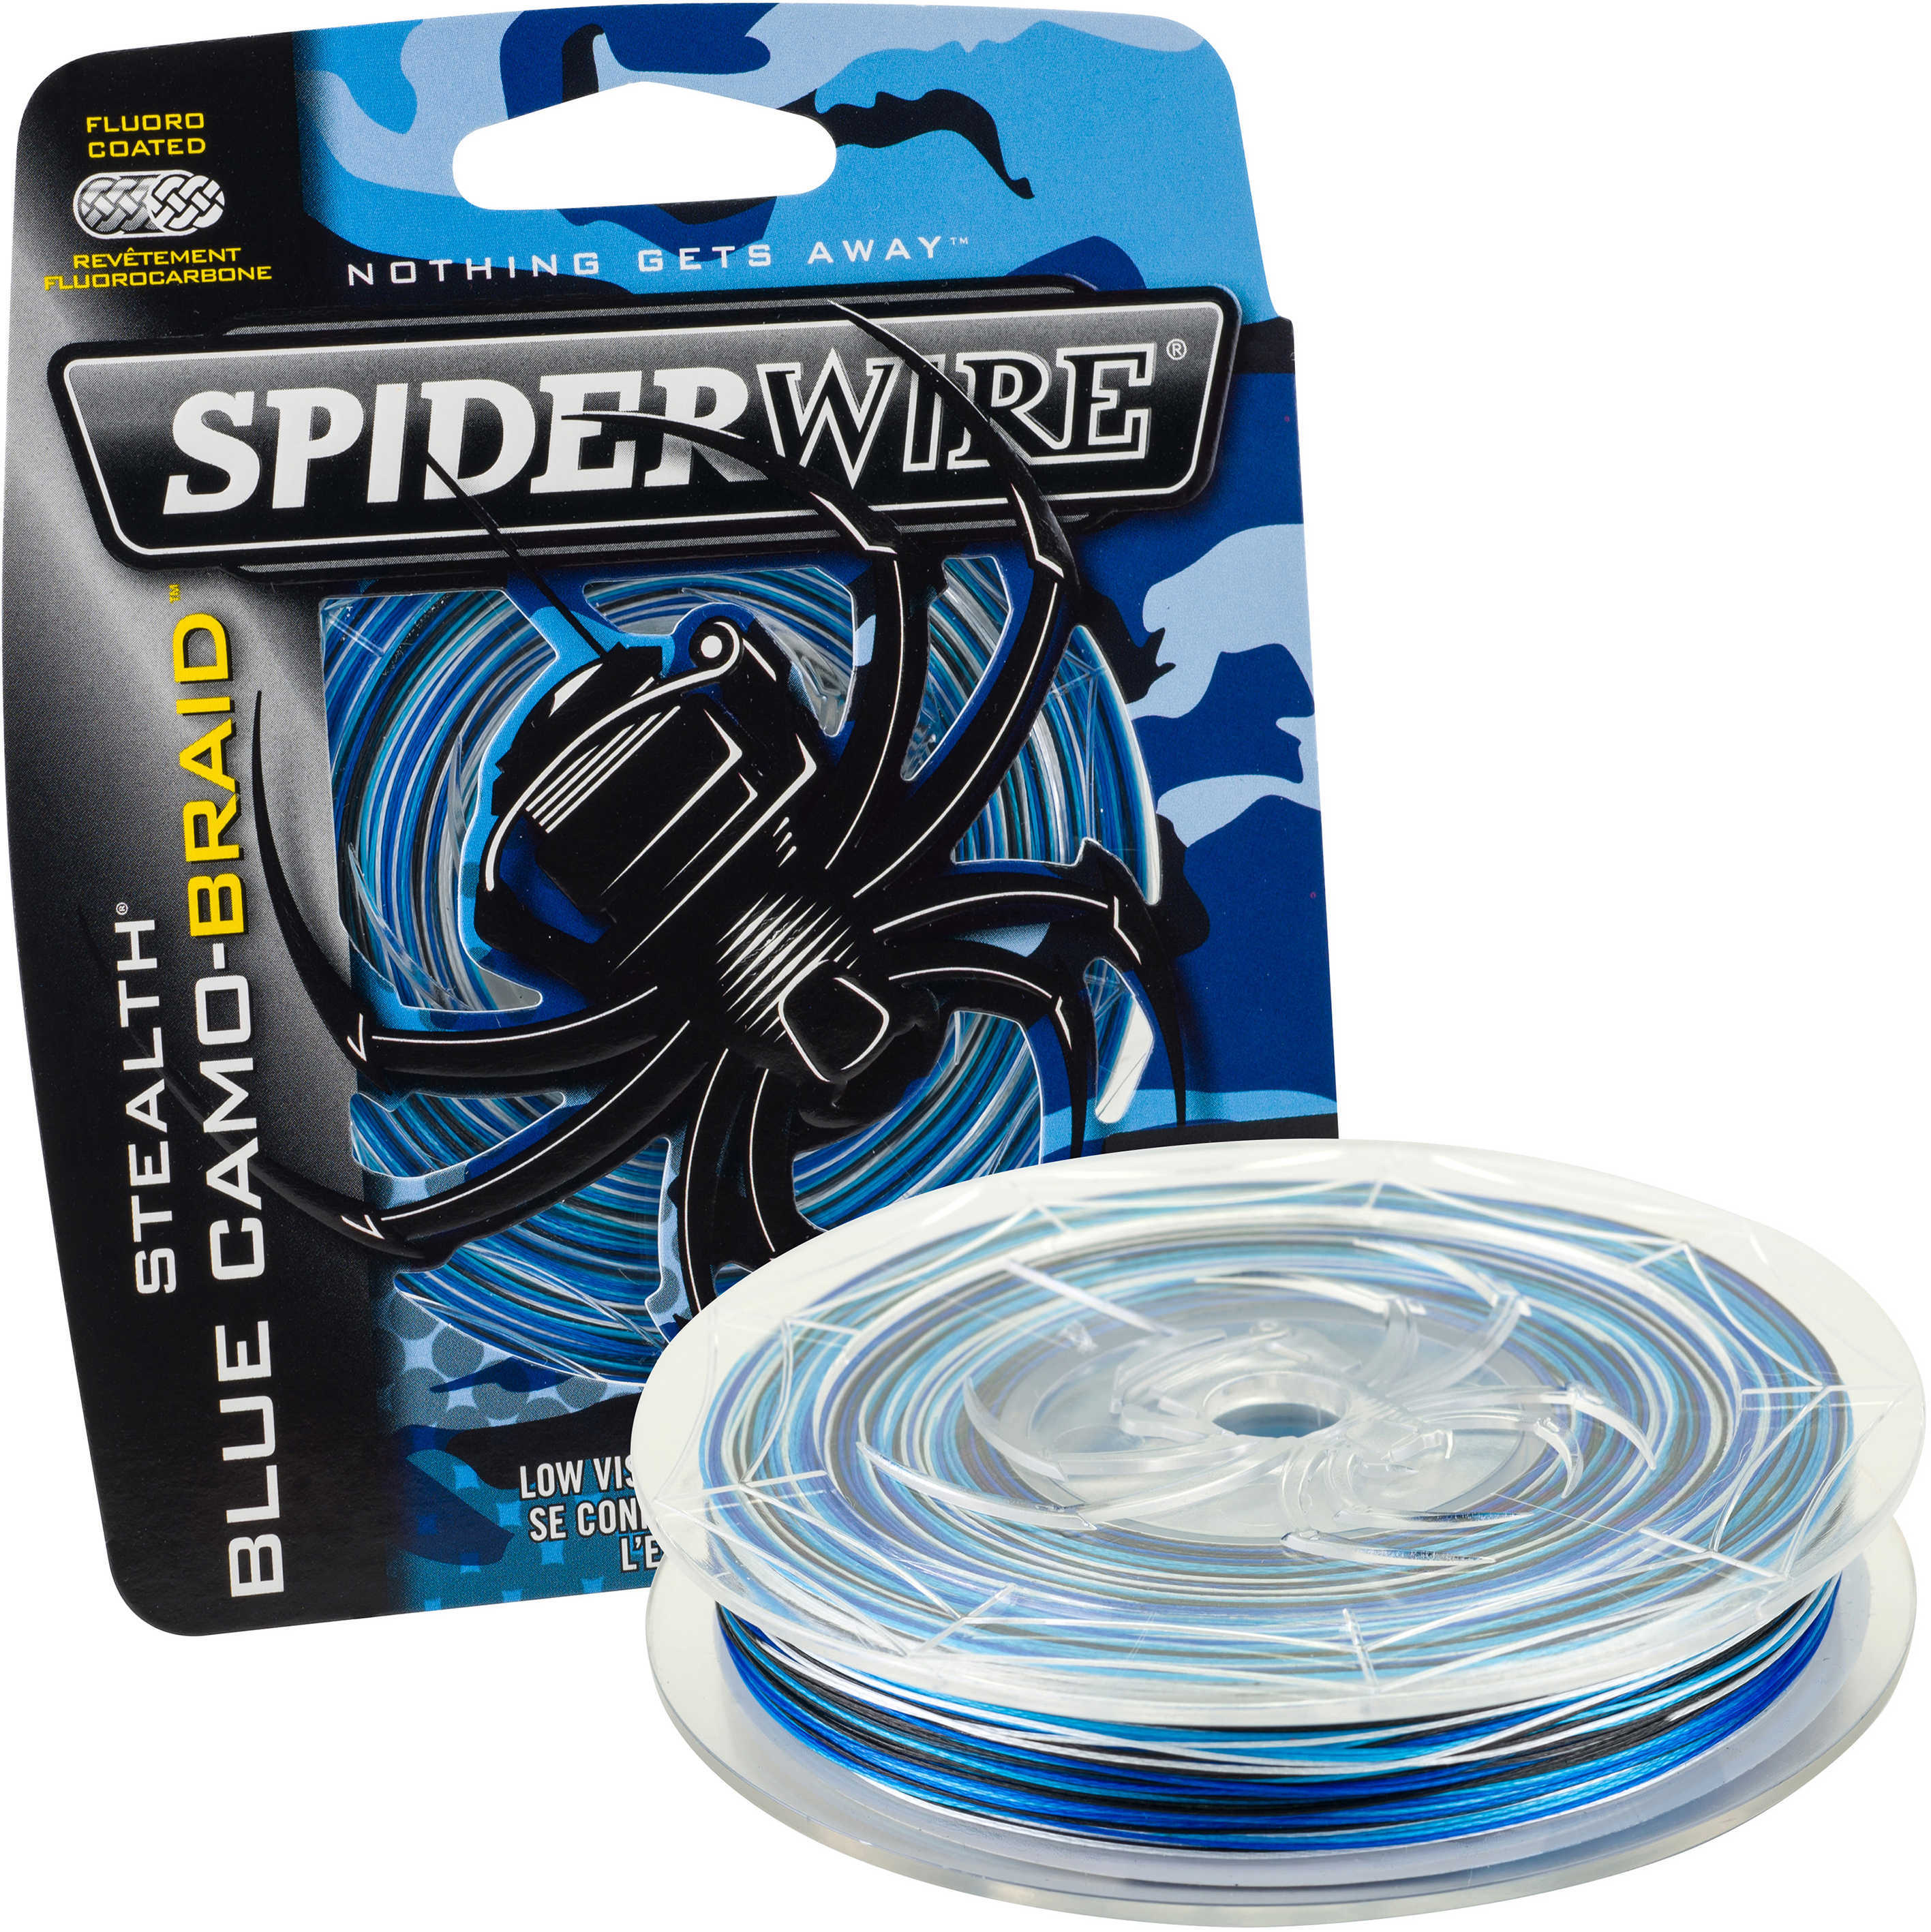 Spiderwire Stealth Braid 200 Yards , 15 lbs Strength, 0.009" Diameter, Blue Camo Md: 1374132